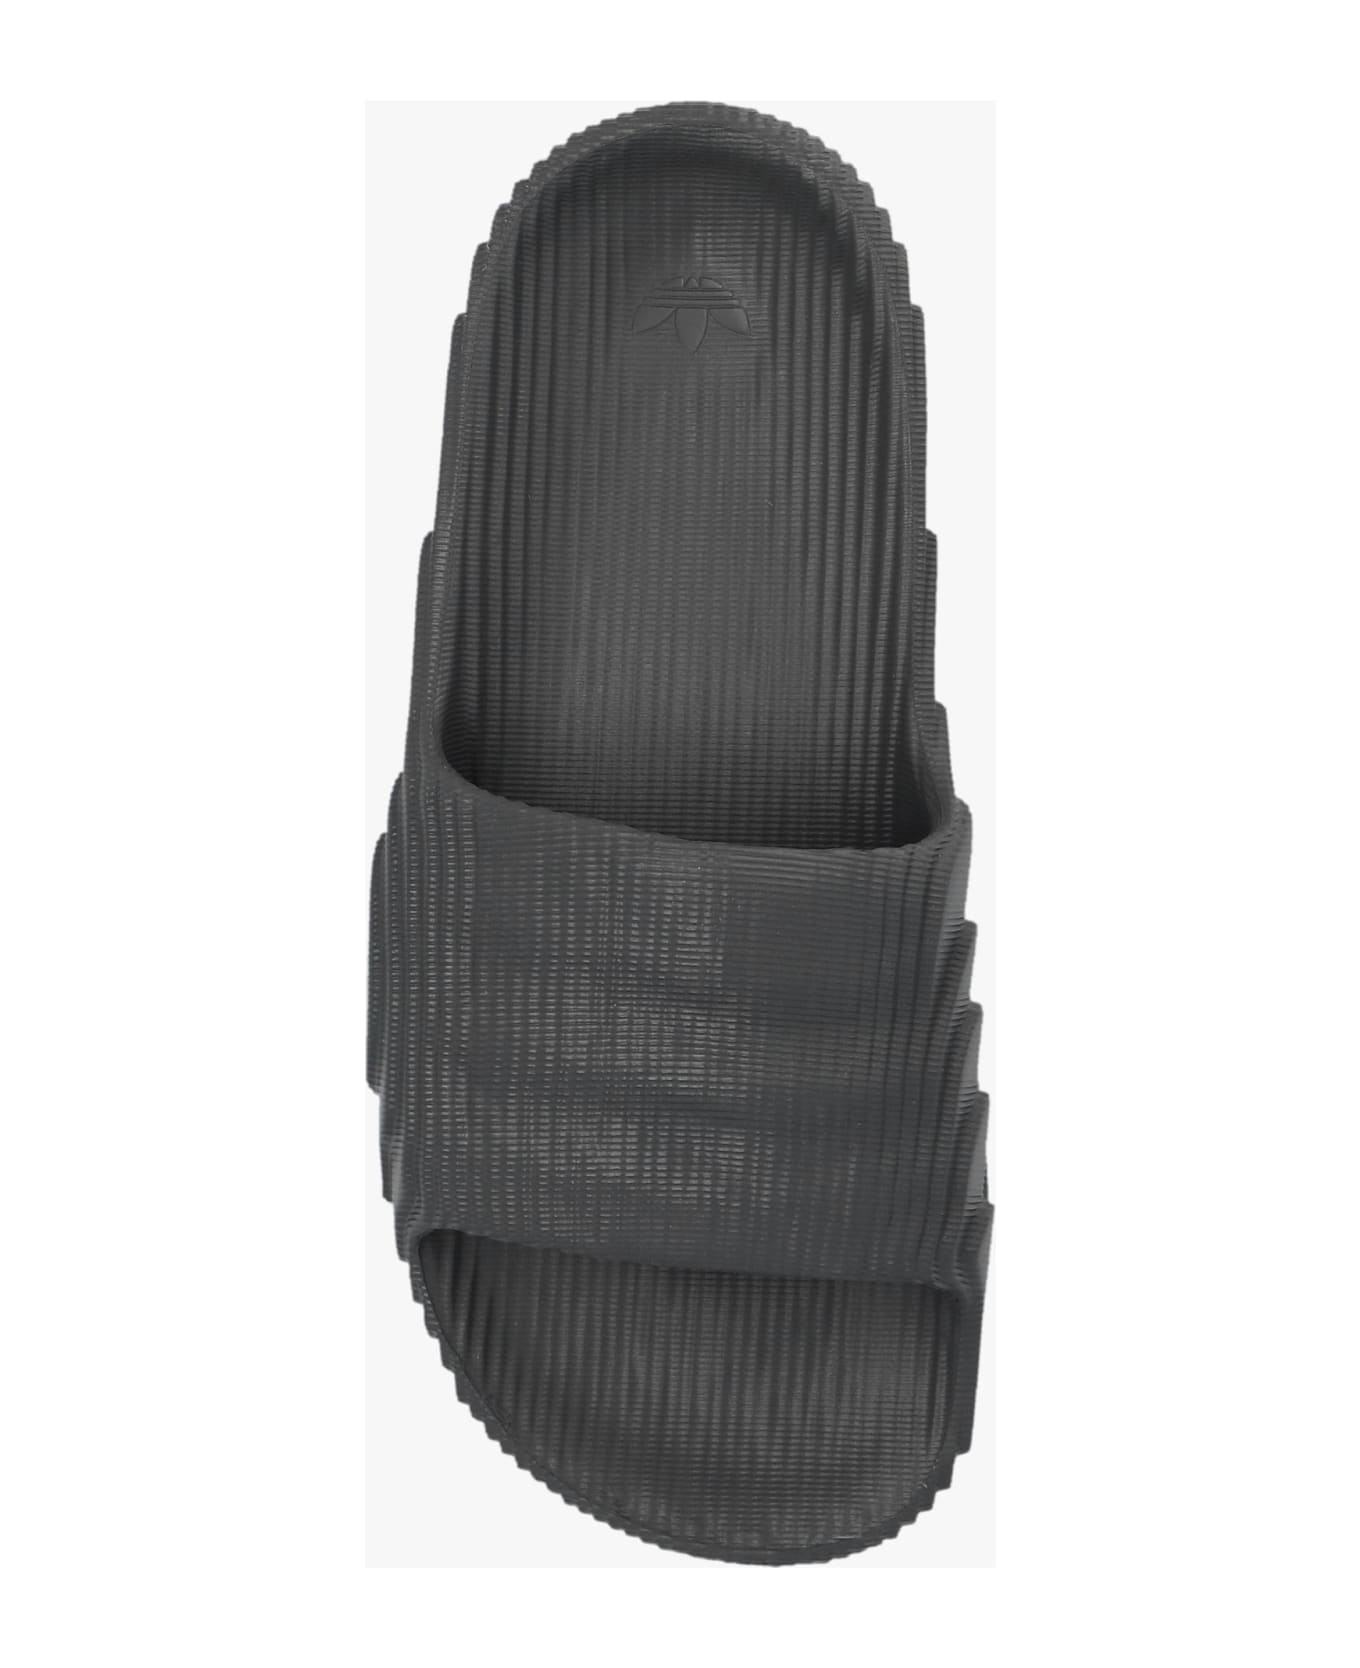 Adidas Originals 'adilette 22' Slides - Gray